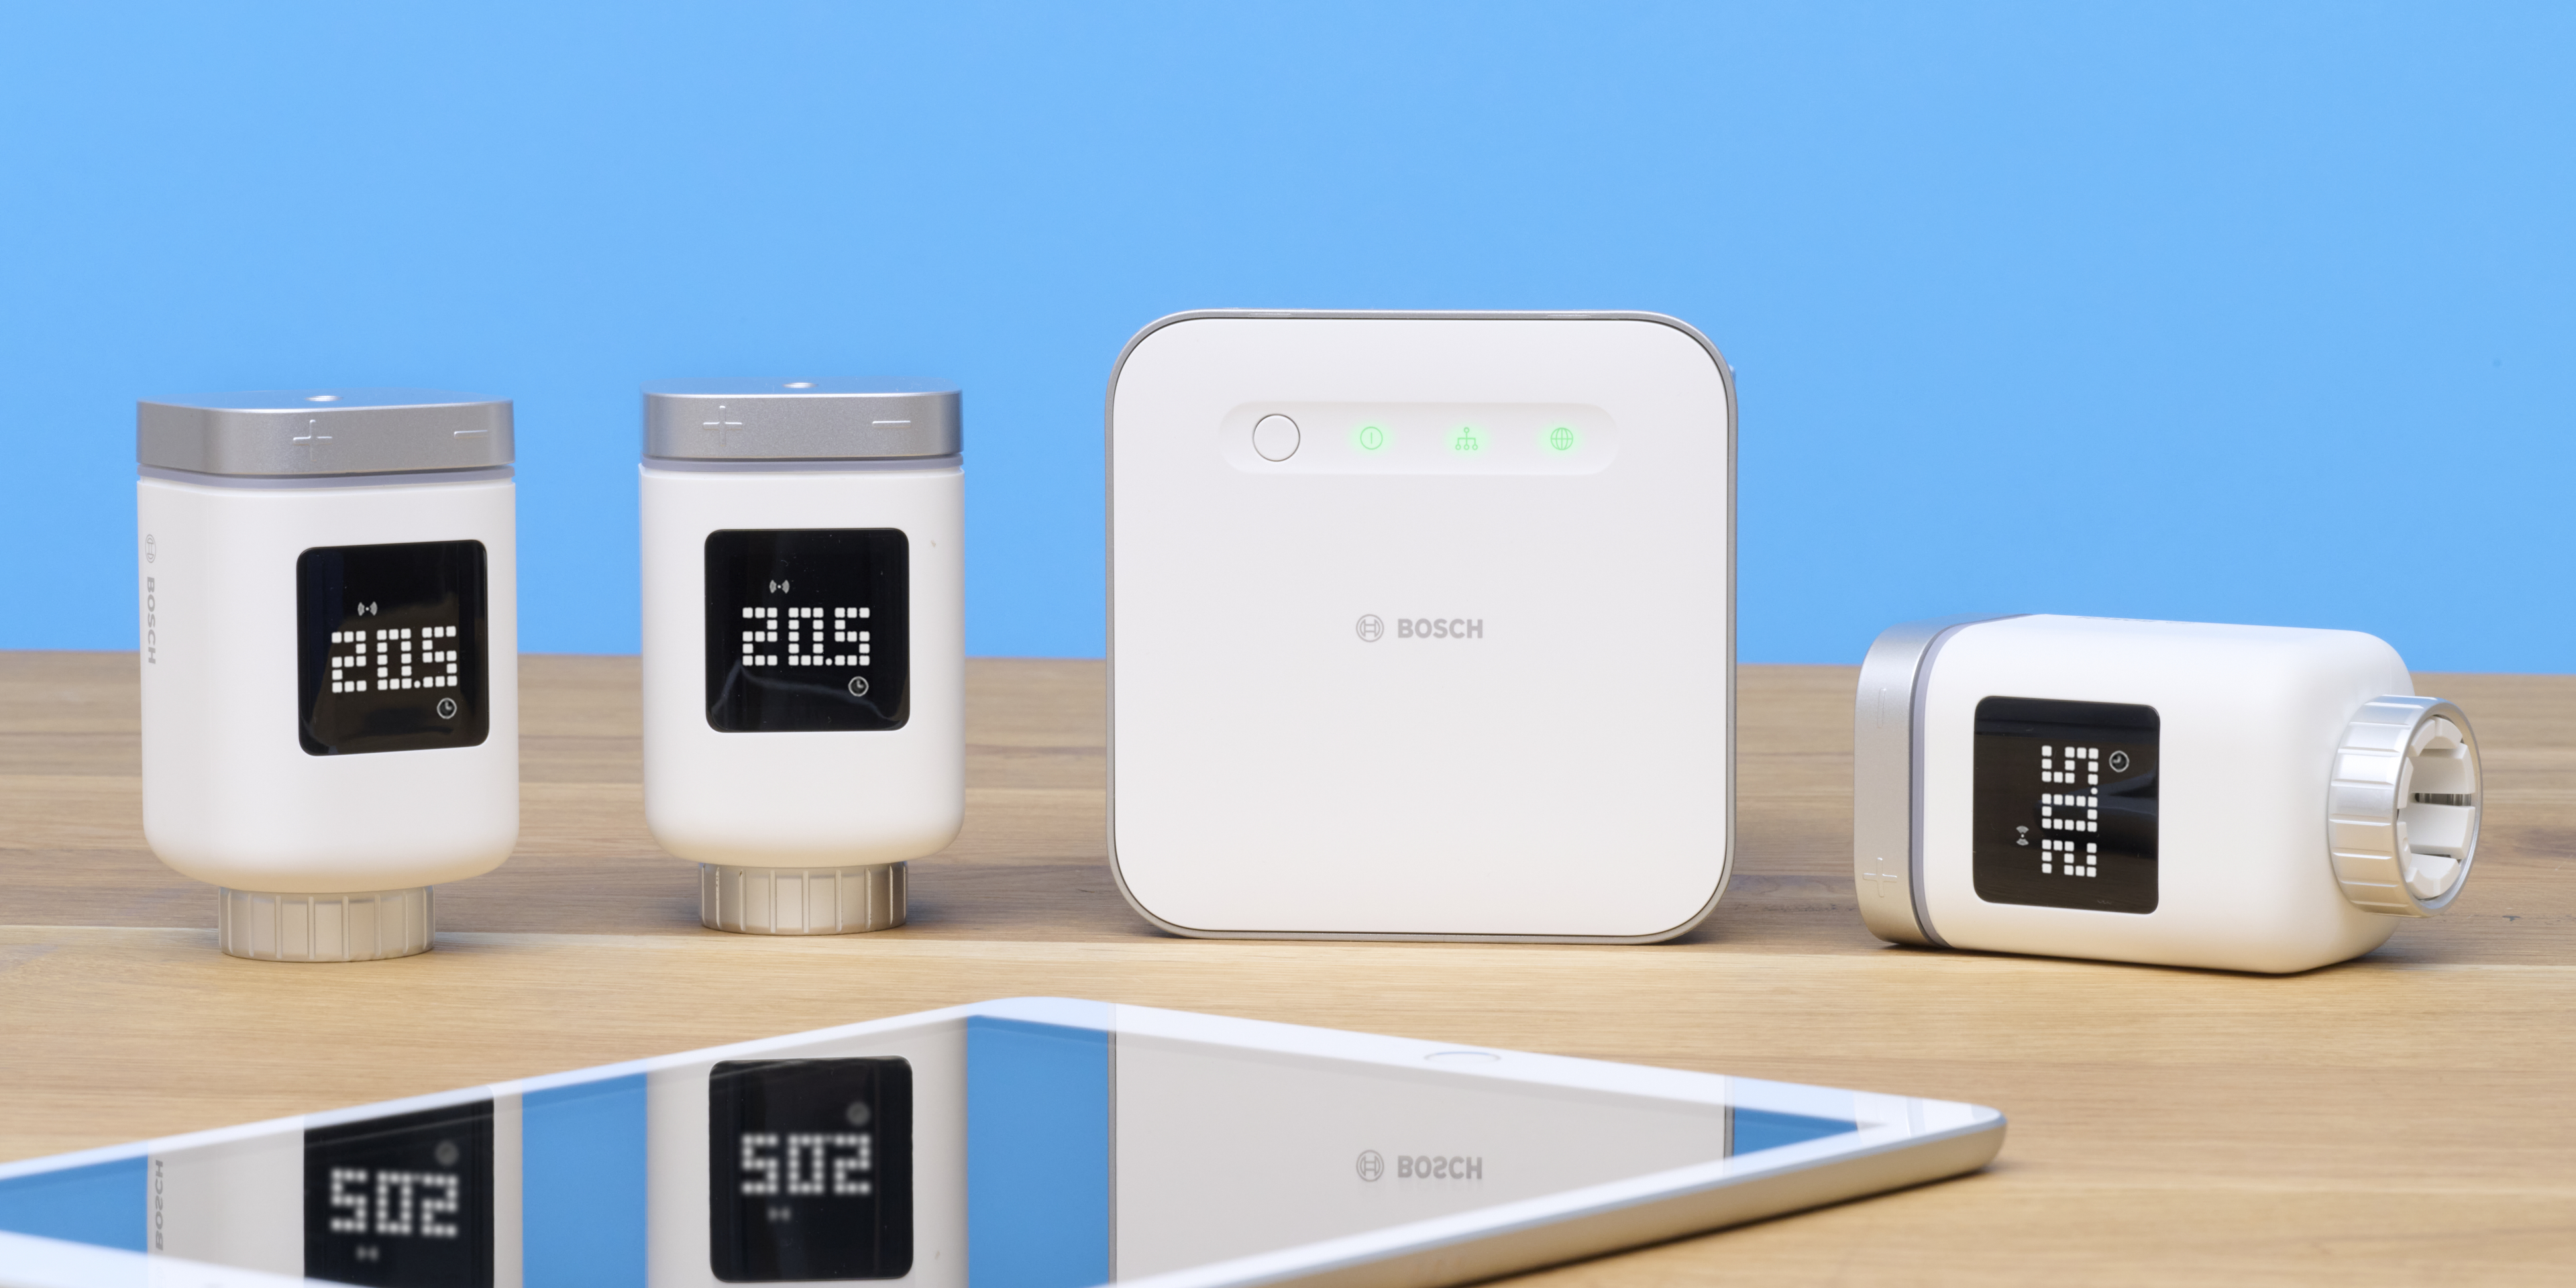 Bosch Smart Home smartes Raumthermostat II • 5er Pack kaufen